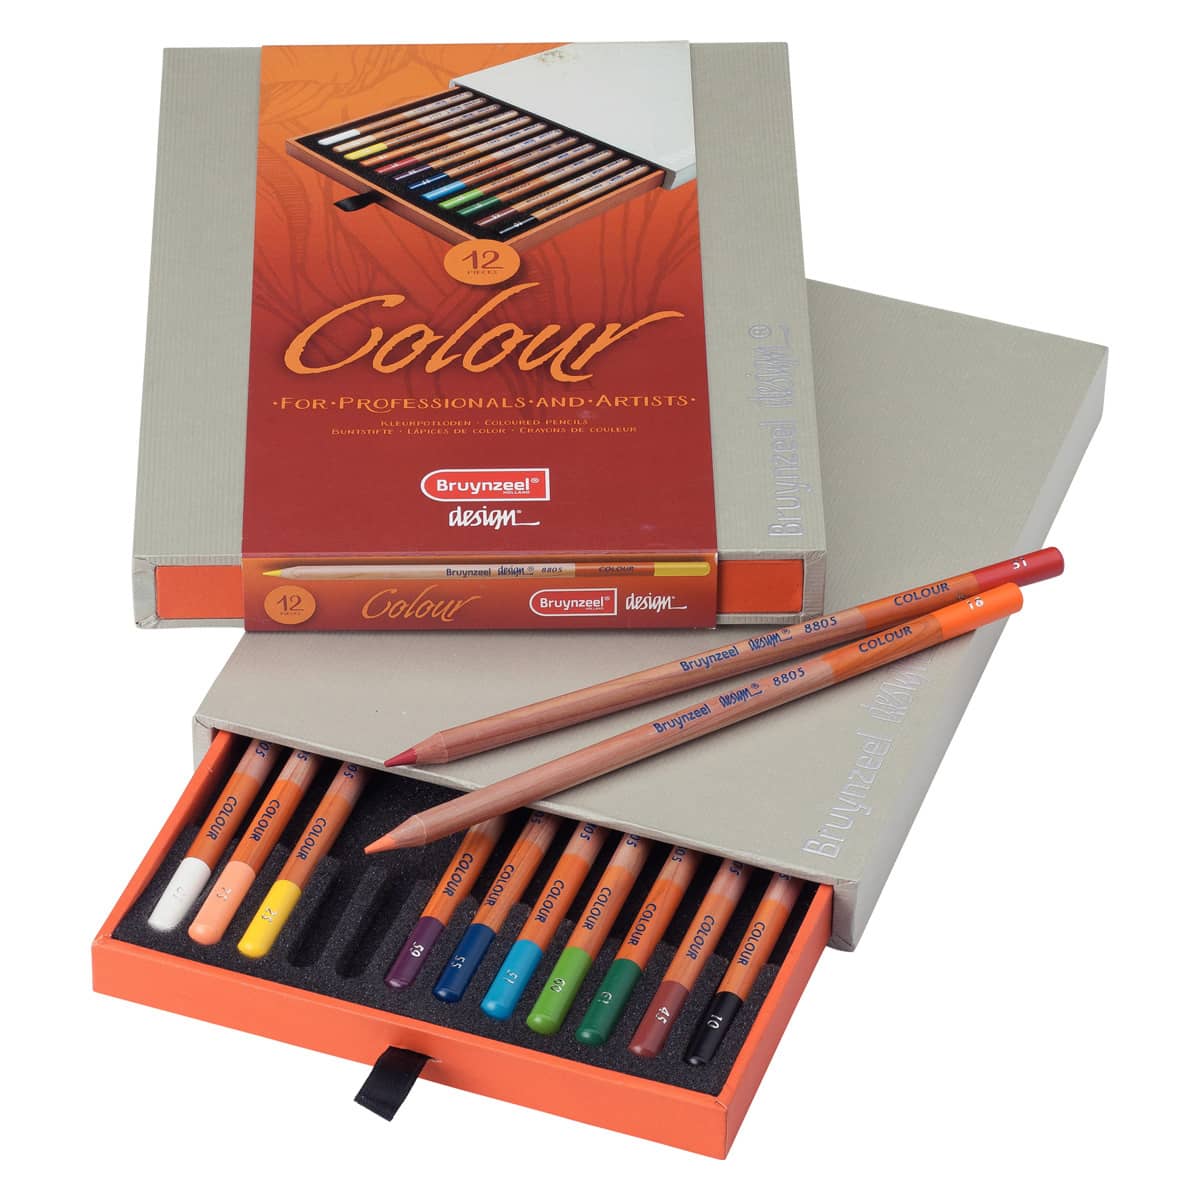 https://www.jerrysartarama.com/media/catalog/product/s/e/set-of-12-bruynzeel-design-colored-pencil-sets-ls-v25492.jpg